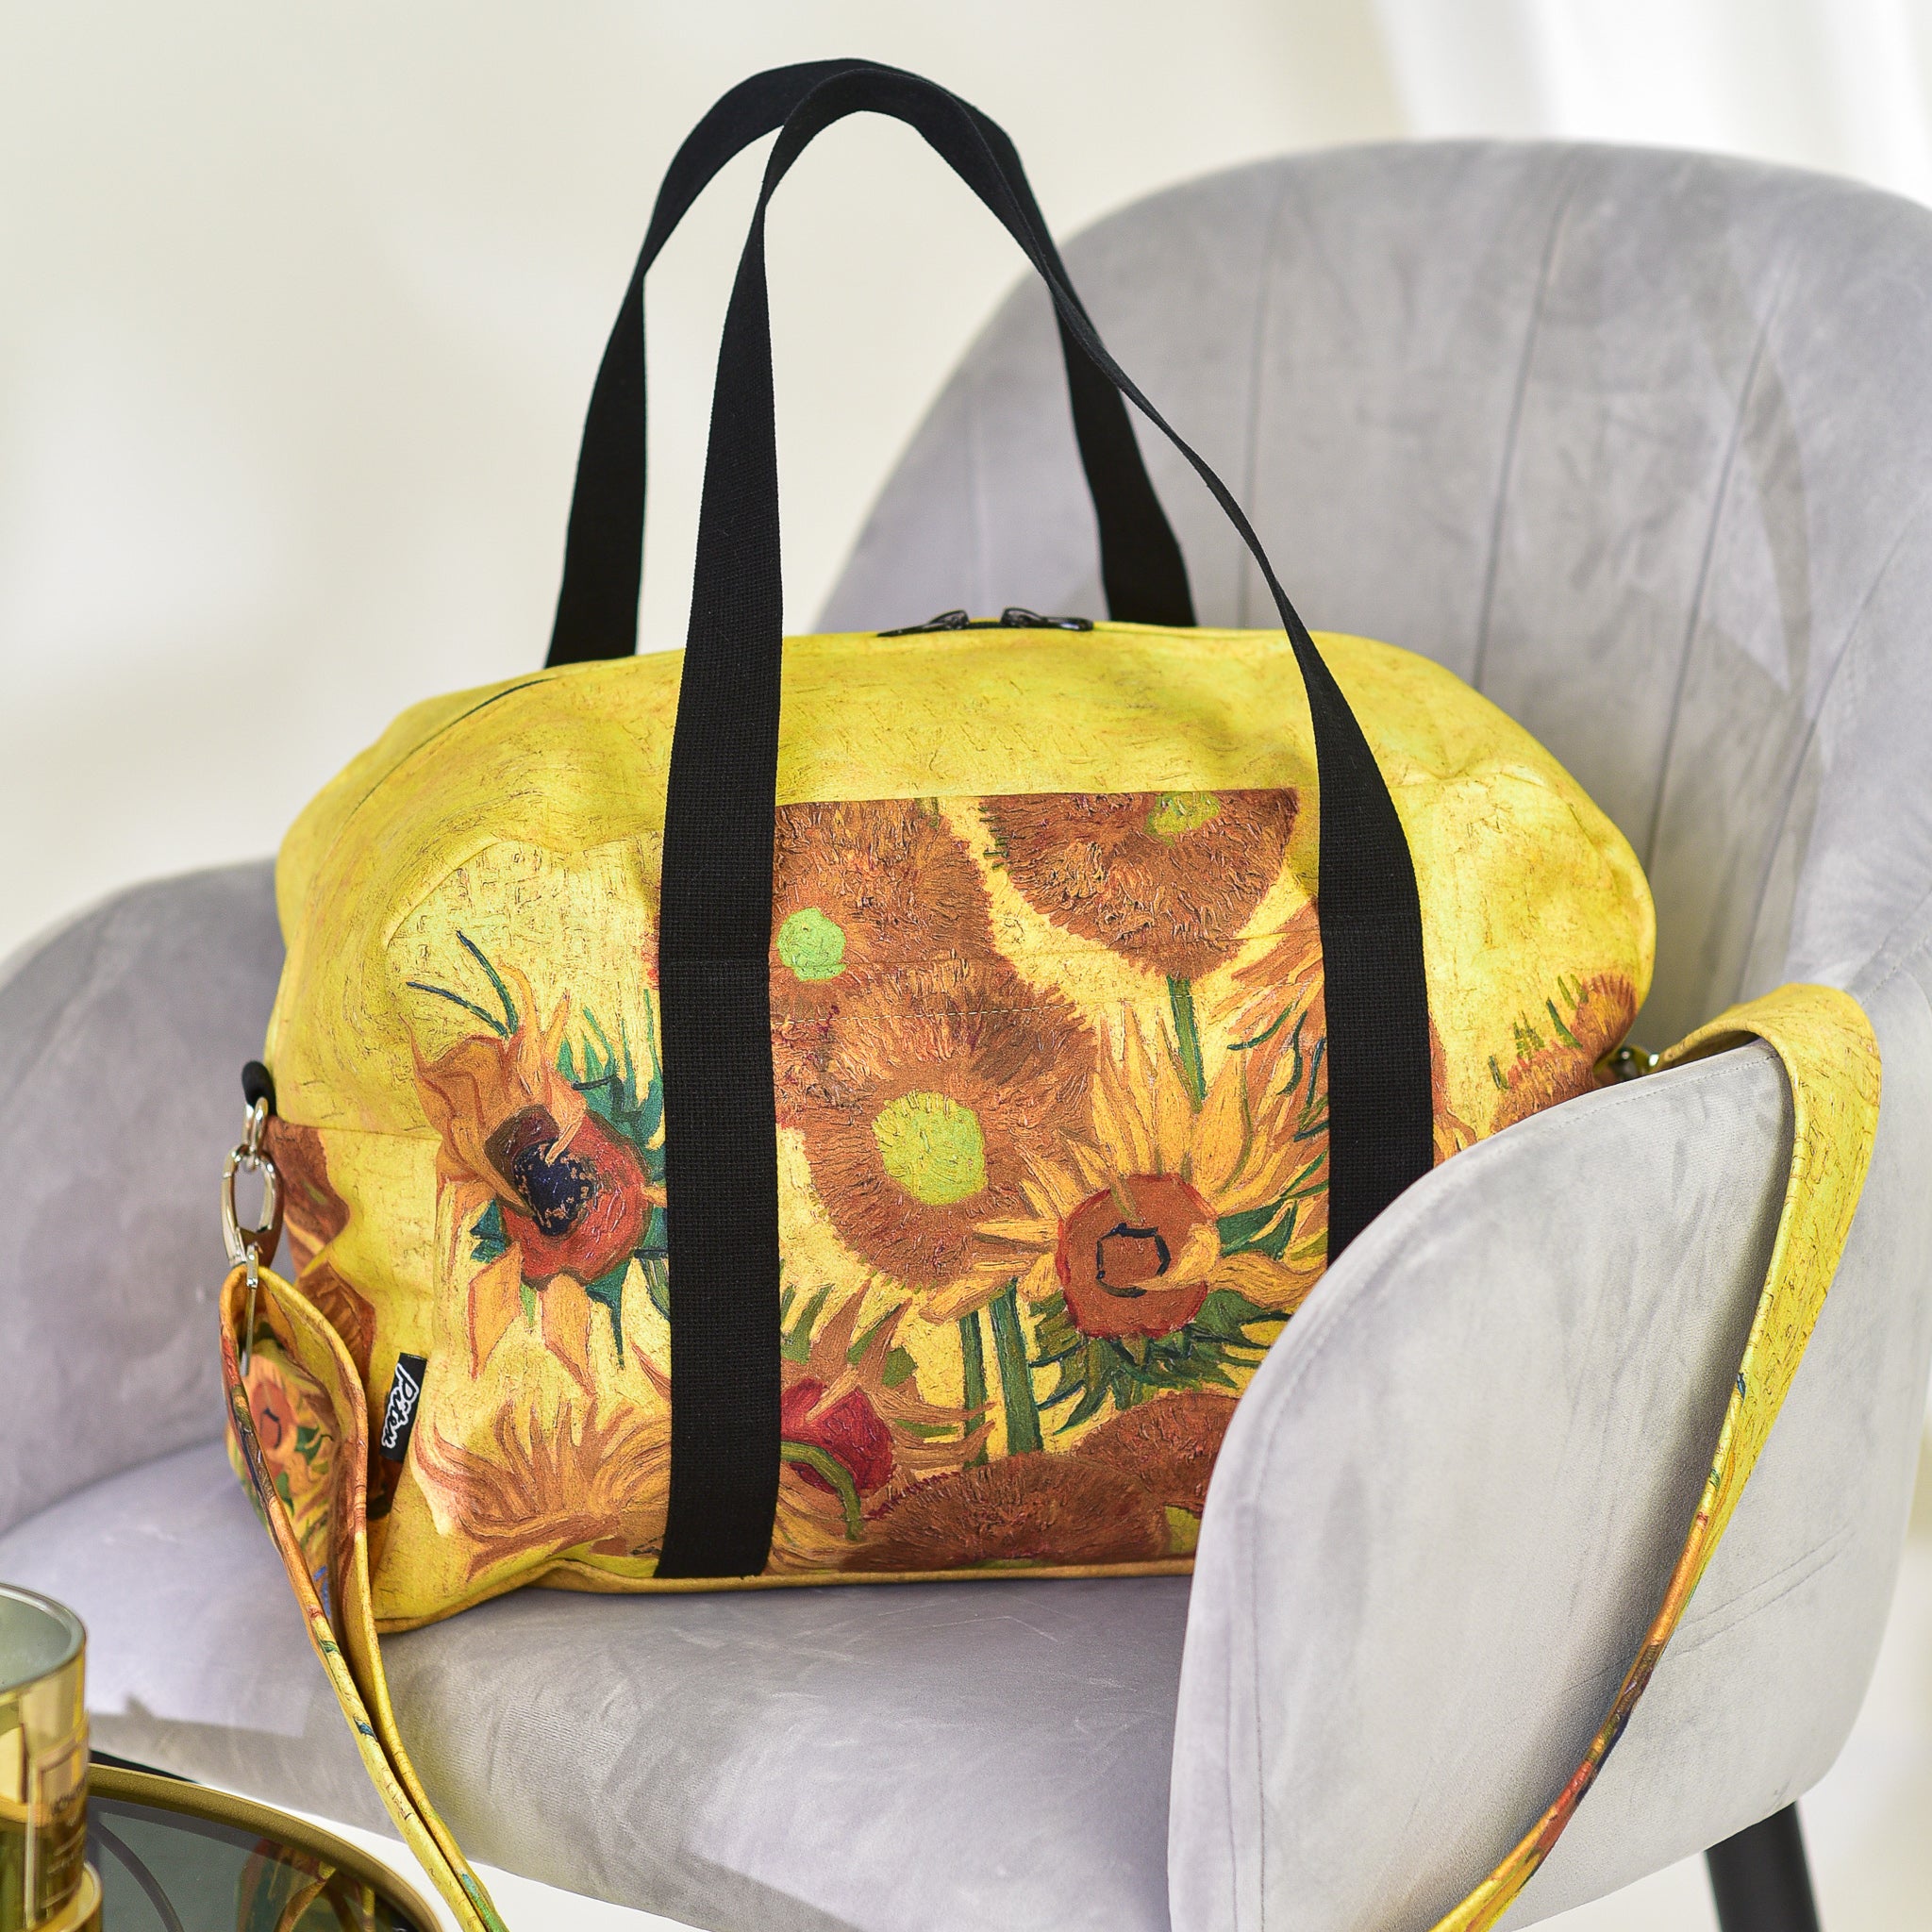 Travel / sports bag Vincent Van Gogh "Sunflowers"